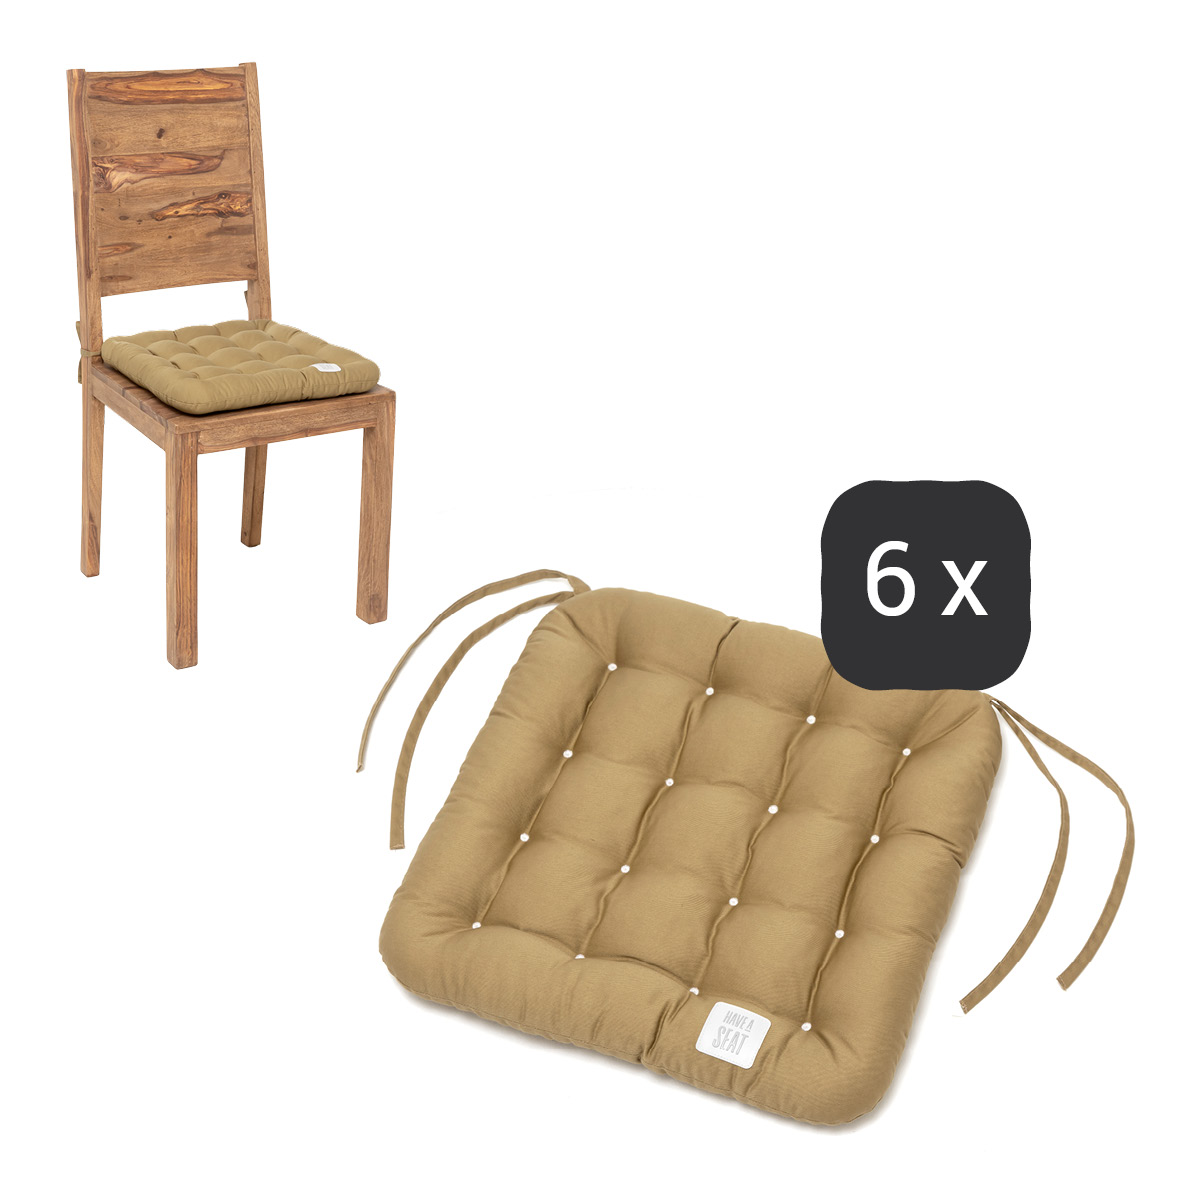 Stuhlkissen 40 x 40 cm / Beige | 6er Set | Premium-Sitzkomfort | Indoor / Outdoor | waschbar bis 95°C | Allergiker geeignet | HAVE A SEAT Living